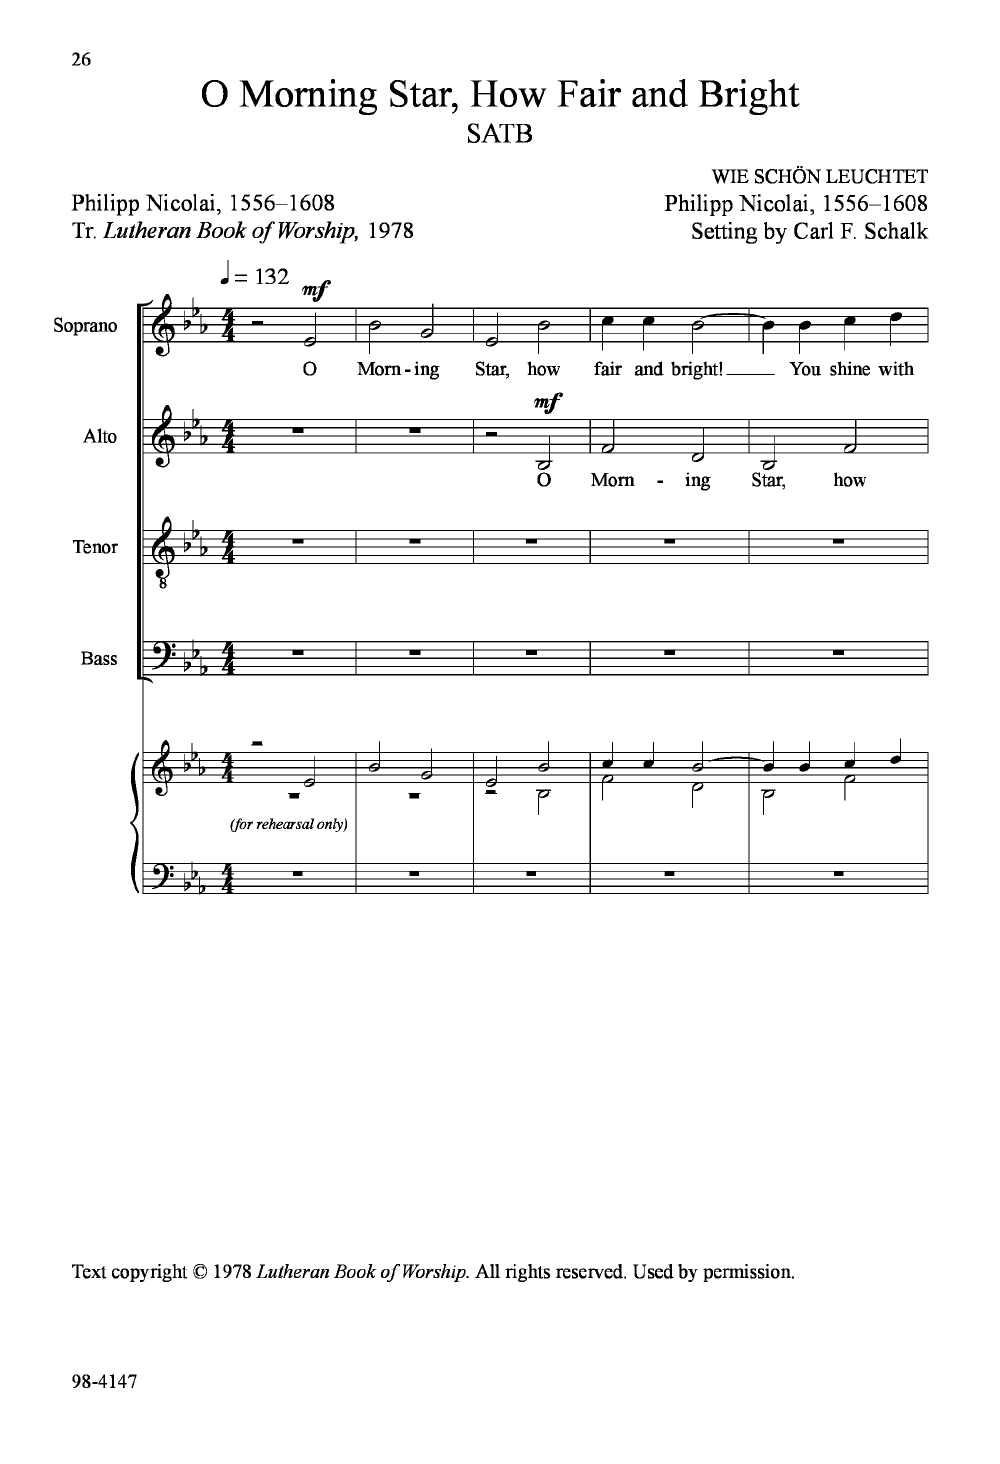 Five Chorale Motets